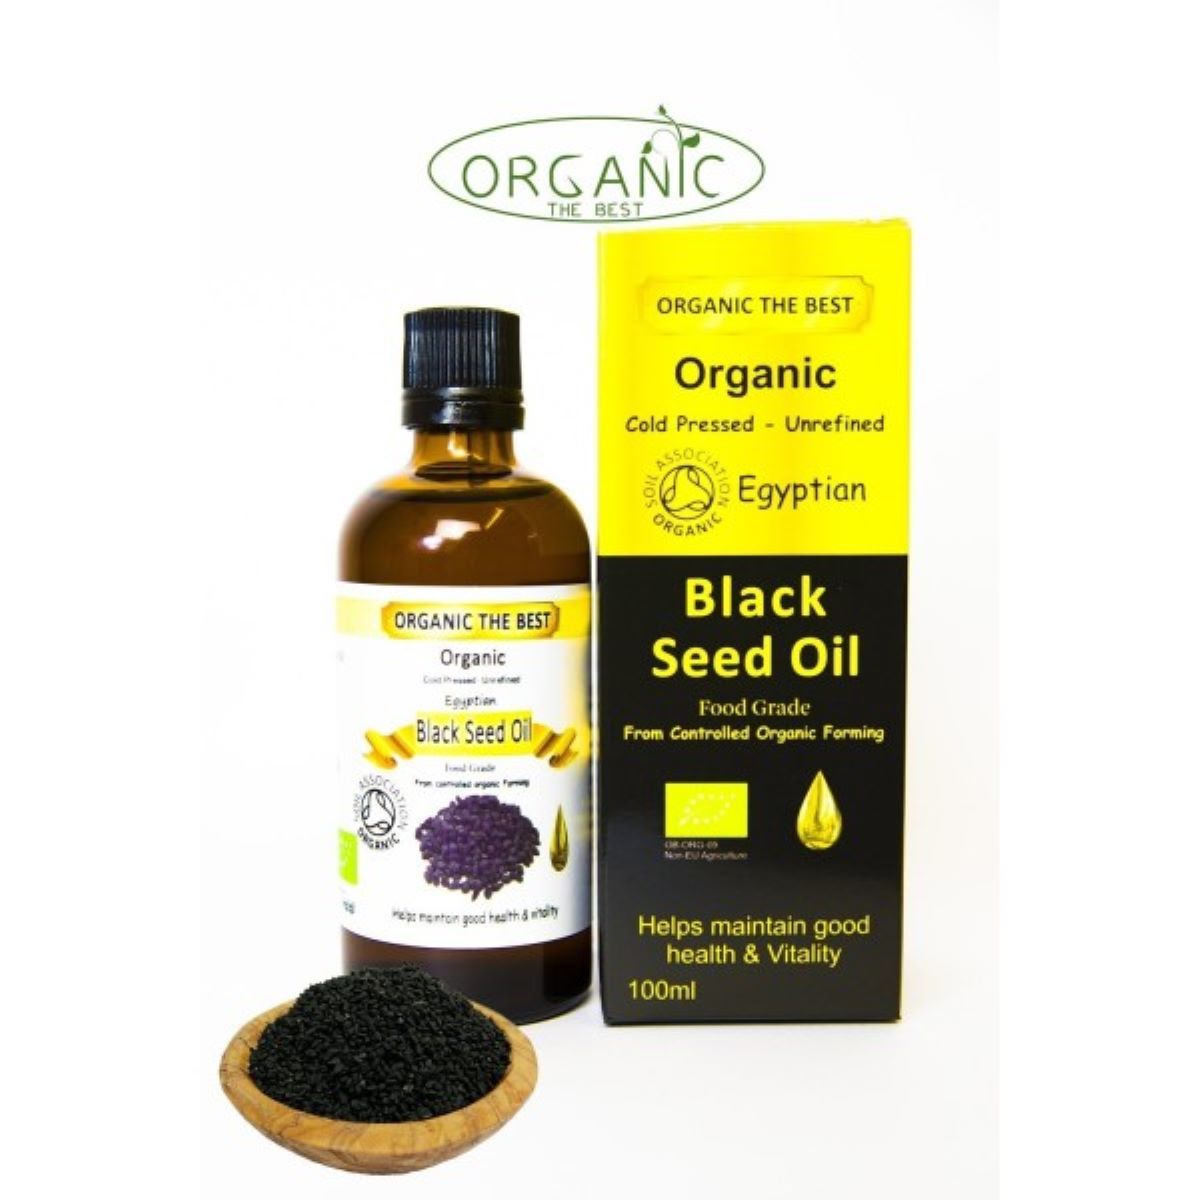 Organic The Best Egyptian Black Seed Oil 100ml